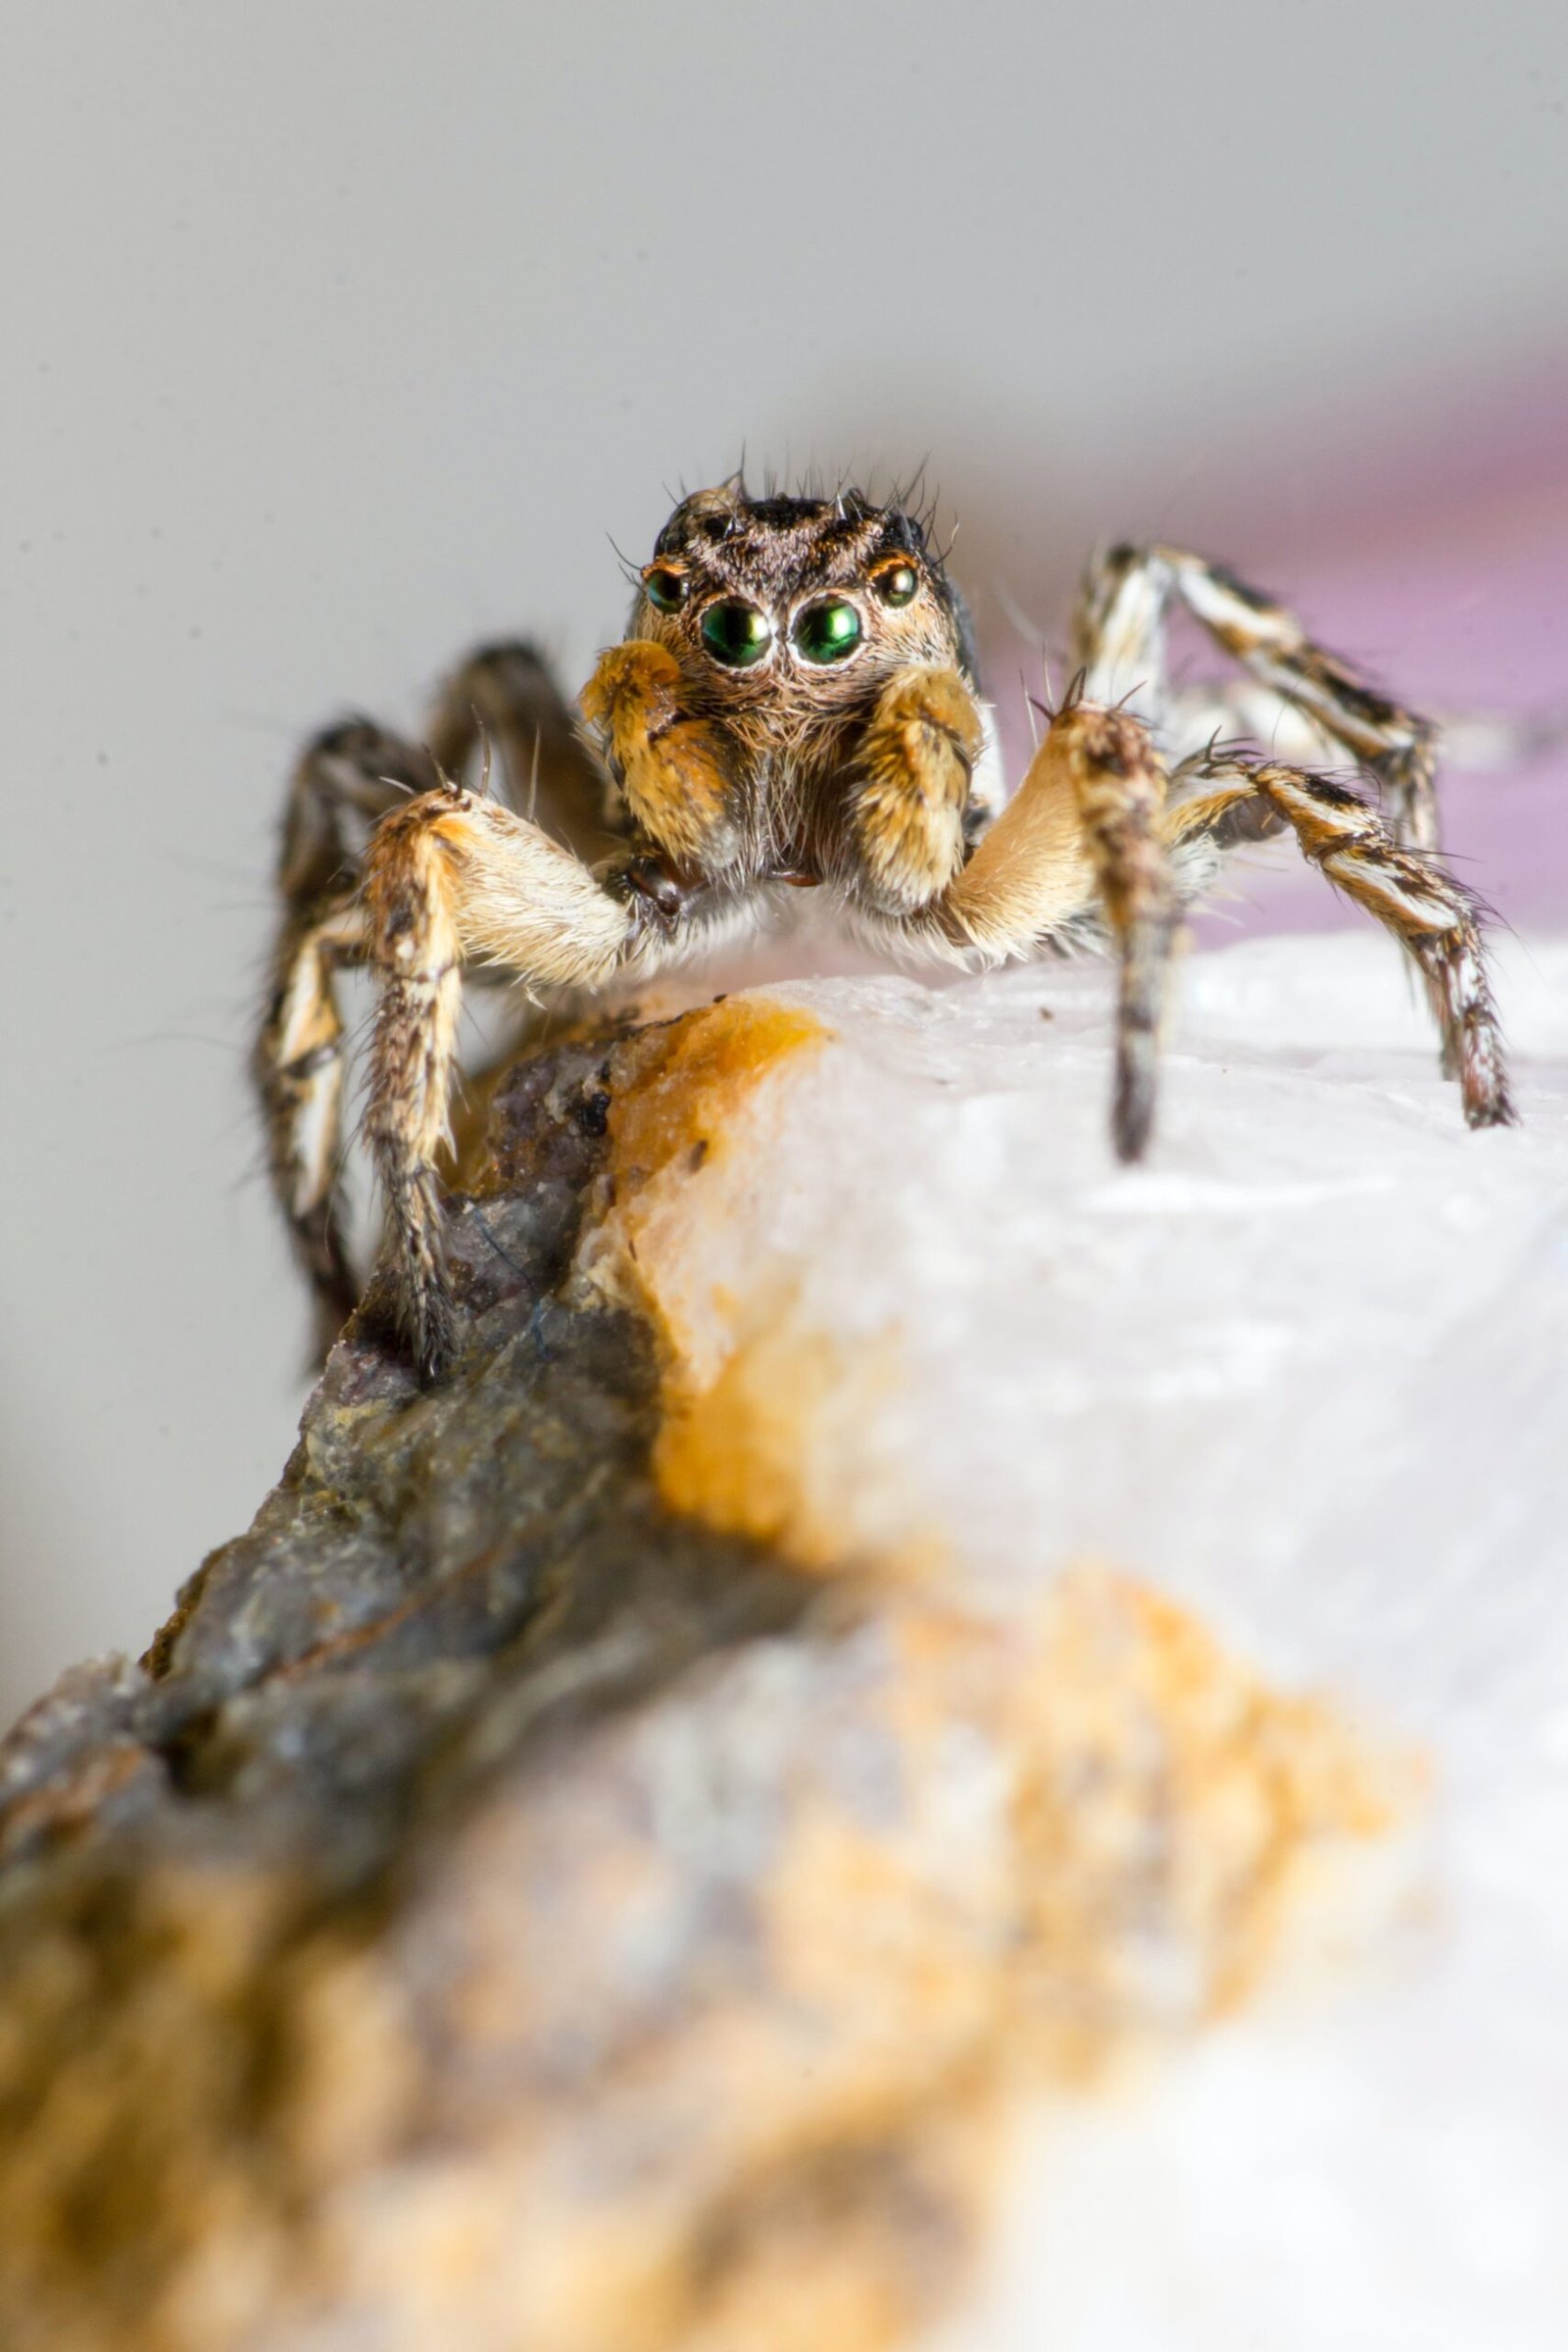 How Do Tarantulas Cope With Threats From Predatory Arachnids Like Sun Spiders?